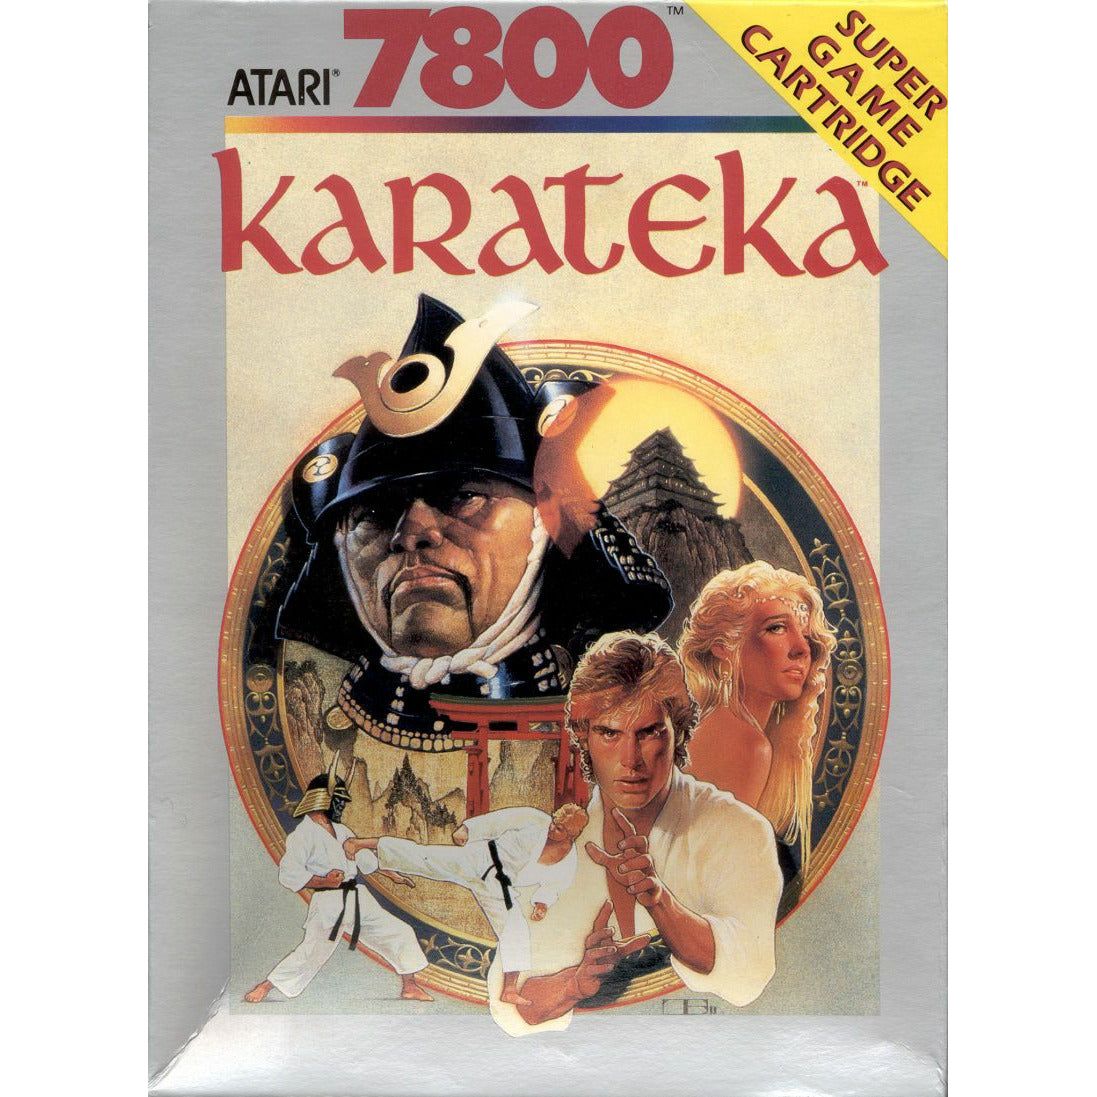 Atari 7800 - Karateka